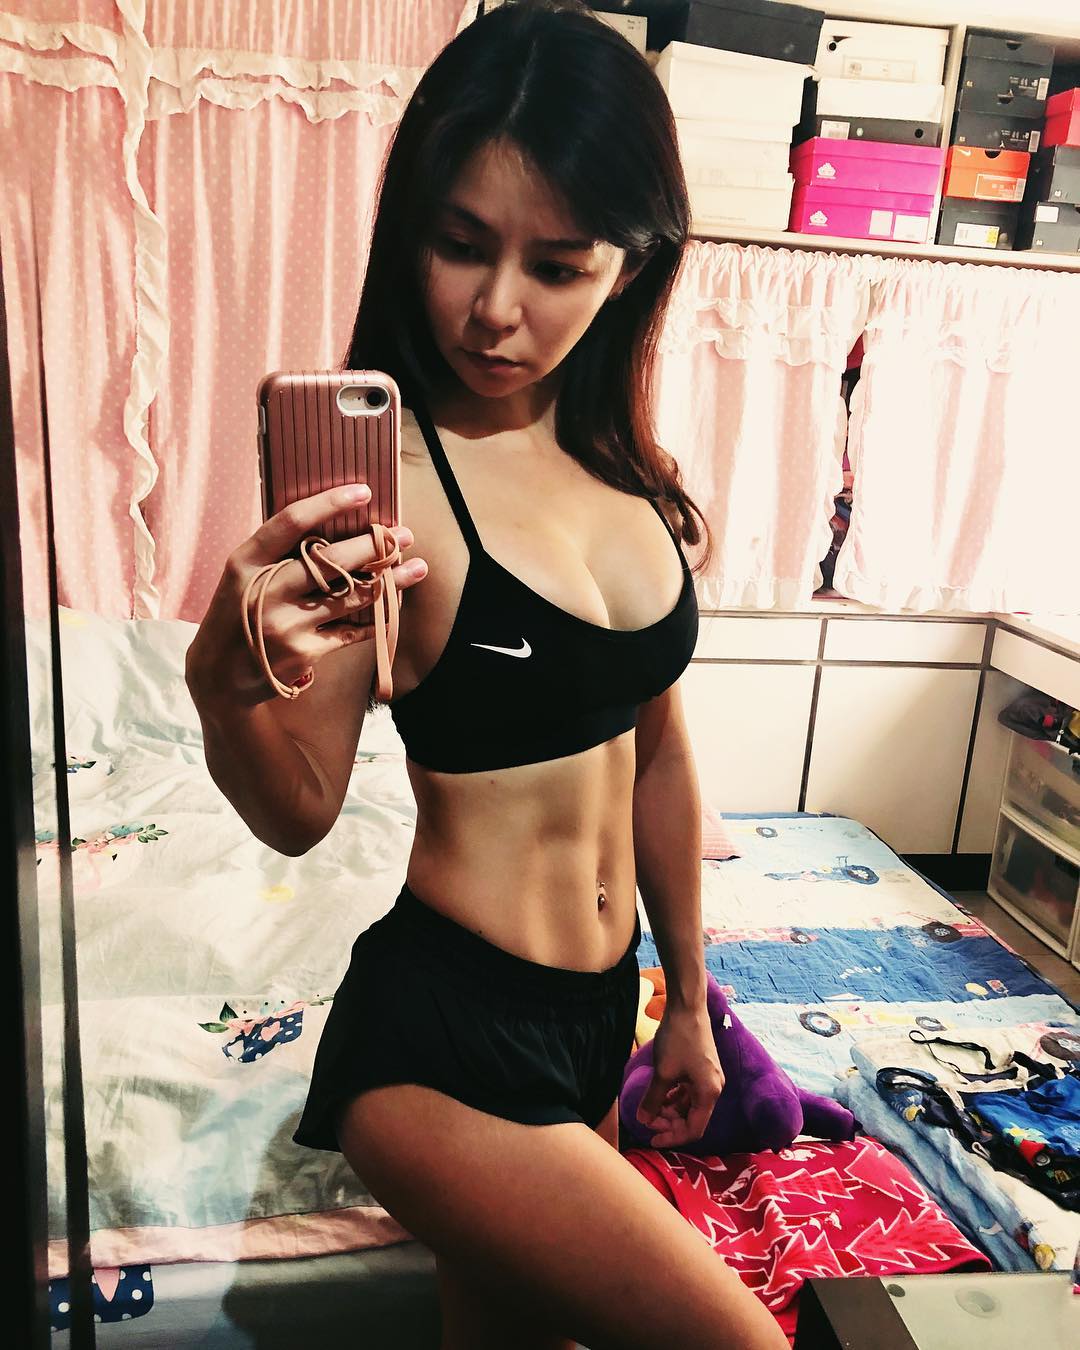 gigobaby 琪琪 江 kiki jiang sexy petite milf breasts tits gym nike workout babe